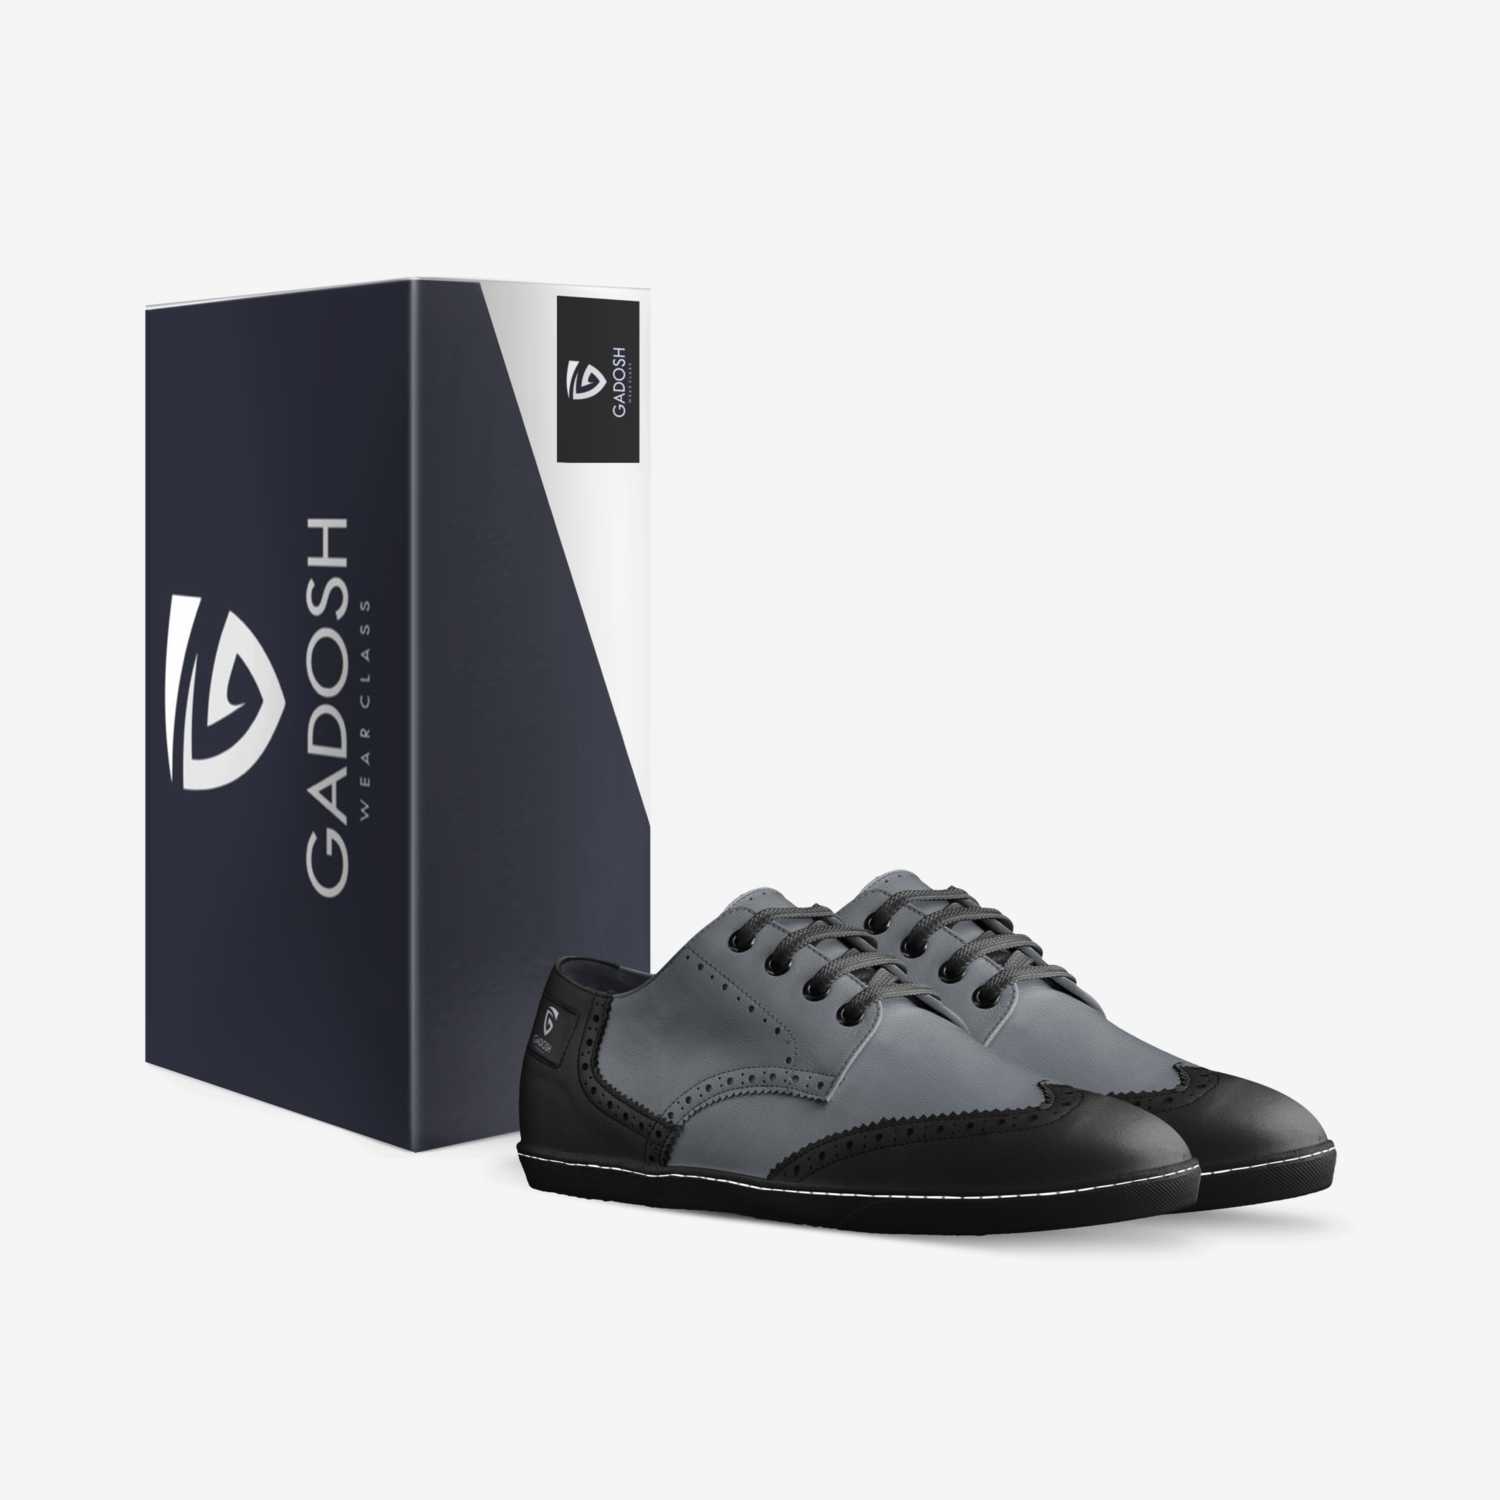 GaDosh custom made in Italy shoes by Okhiria Itua | Box view